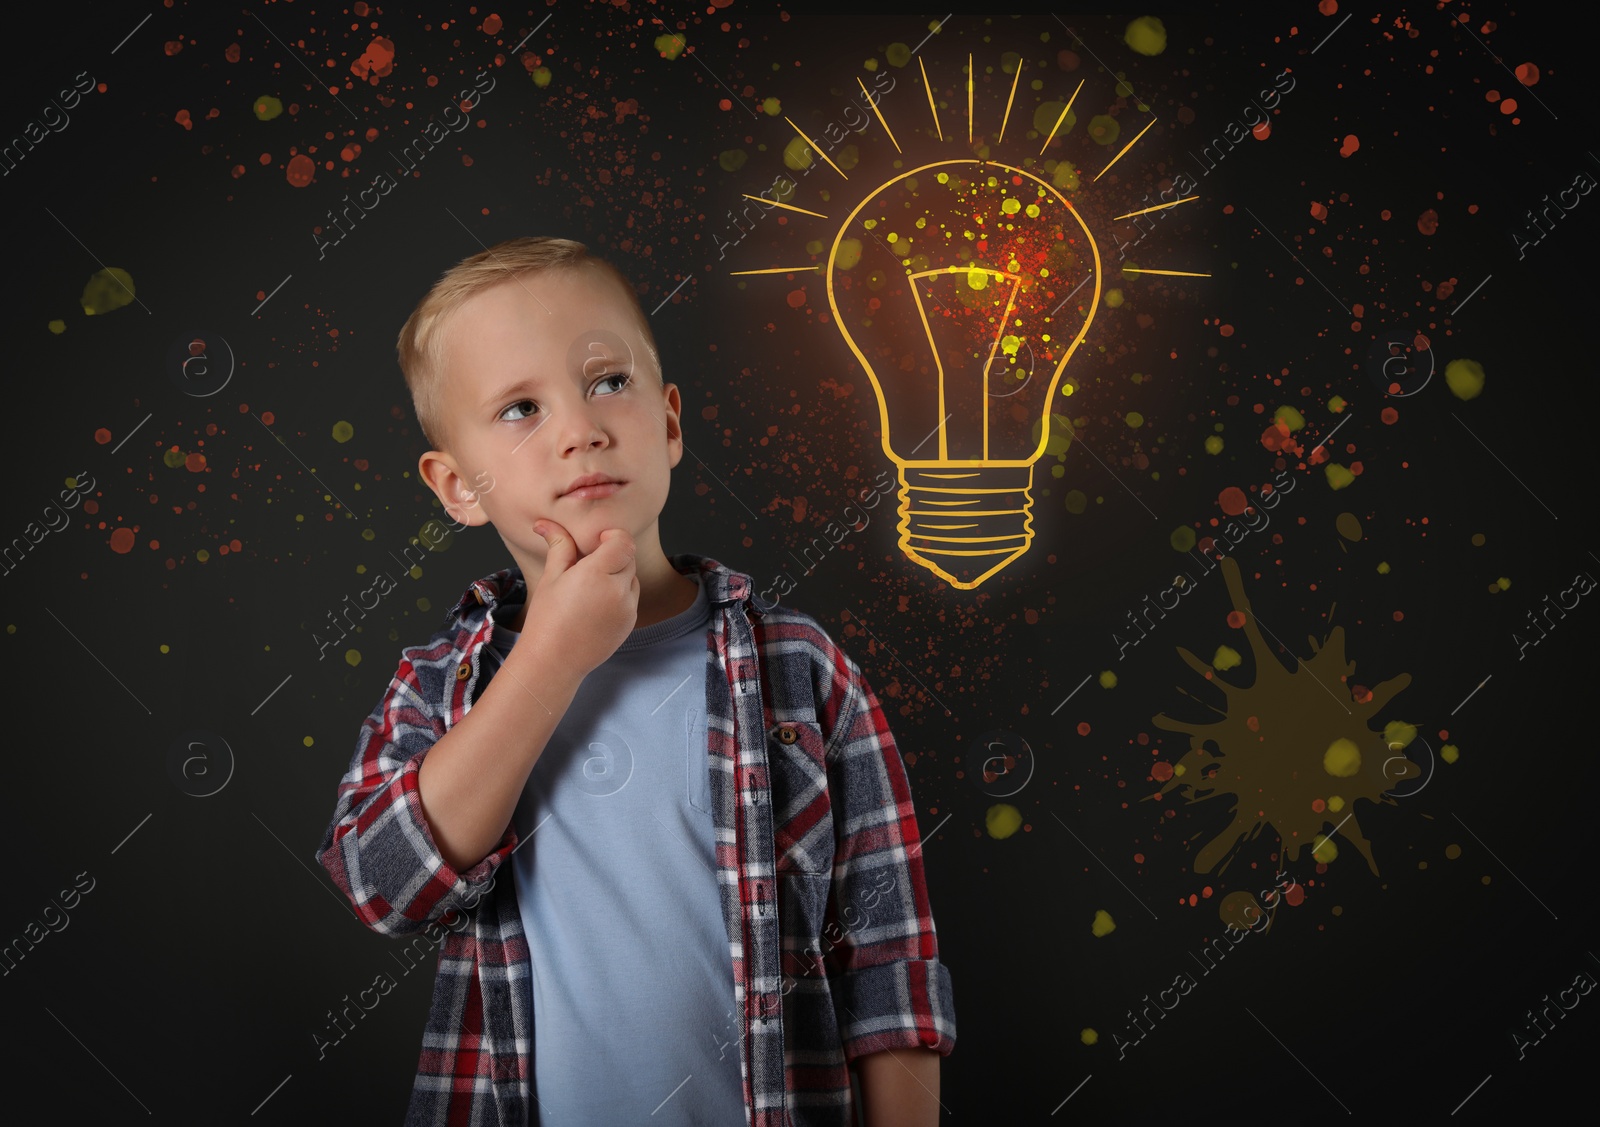 Image of Lightbulb illustration and thoughtful little boy on dark background. Idea generation